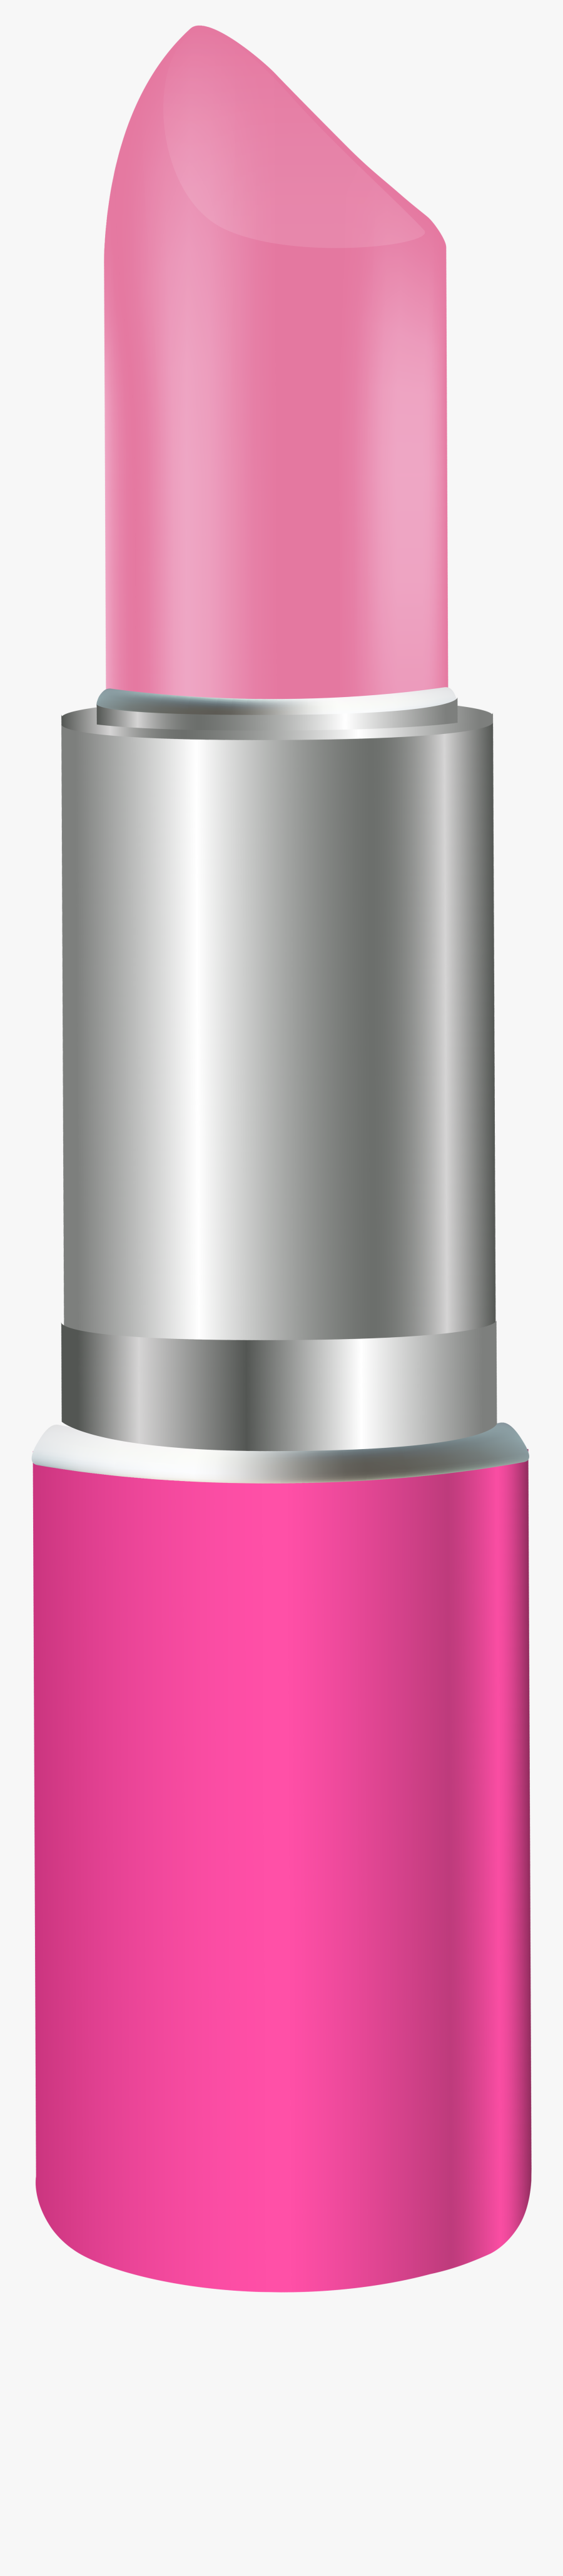 Lipstick Transparent Png Clip Art Image - Pink Lipstick Clipart, Transparent Clipart